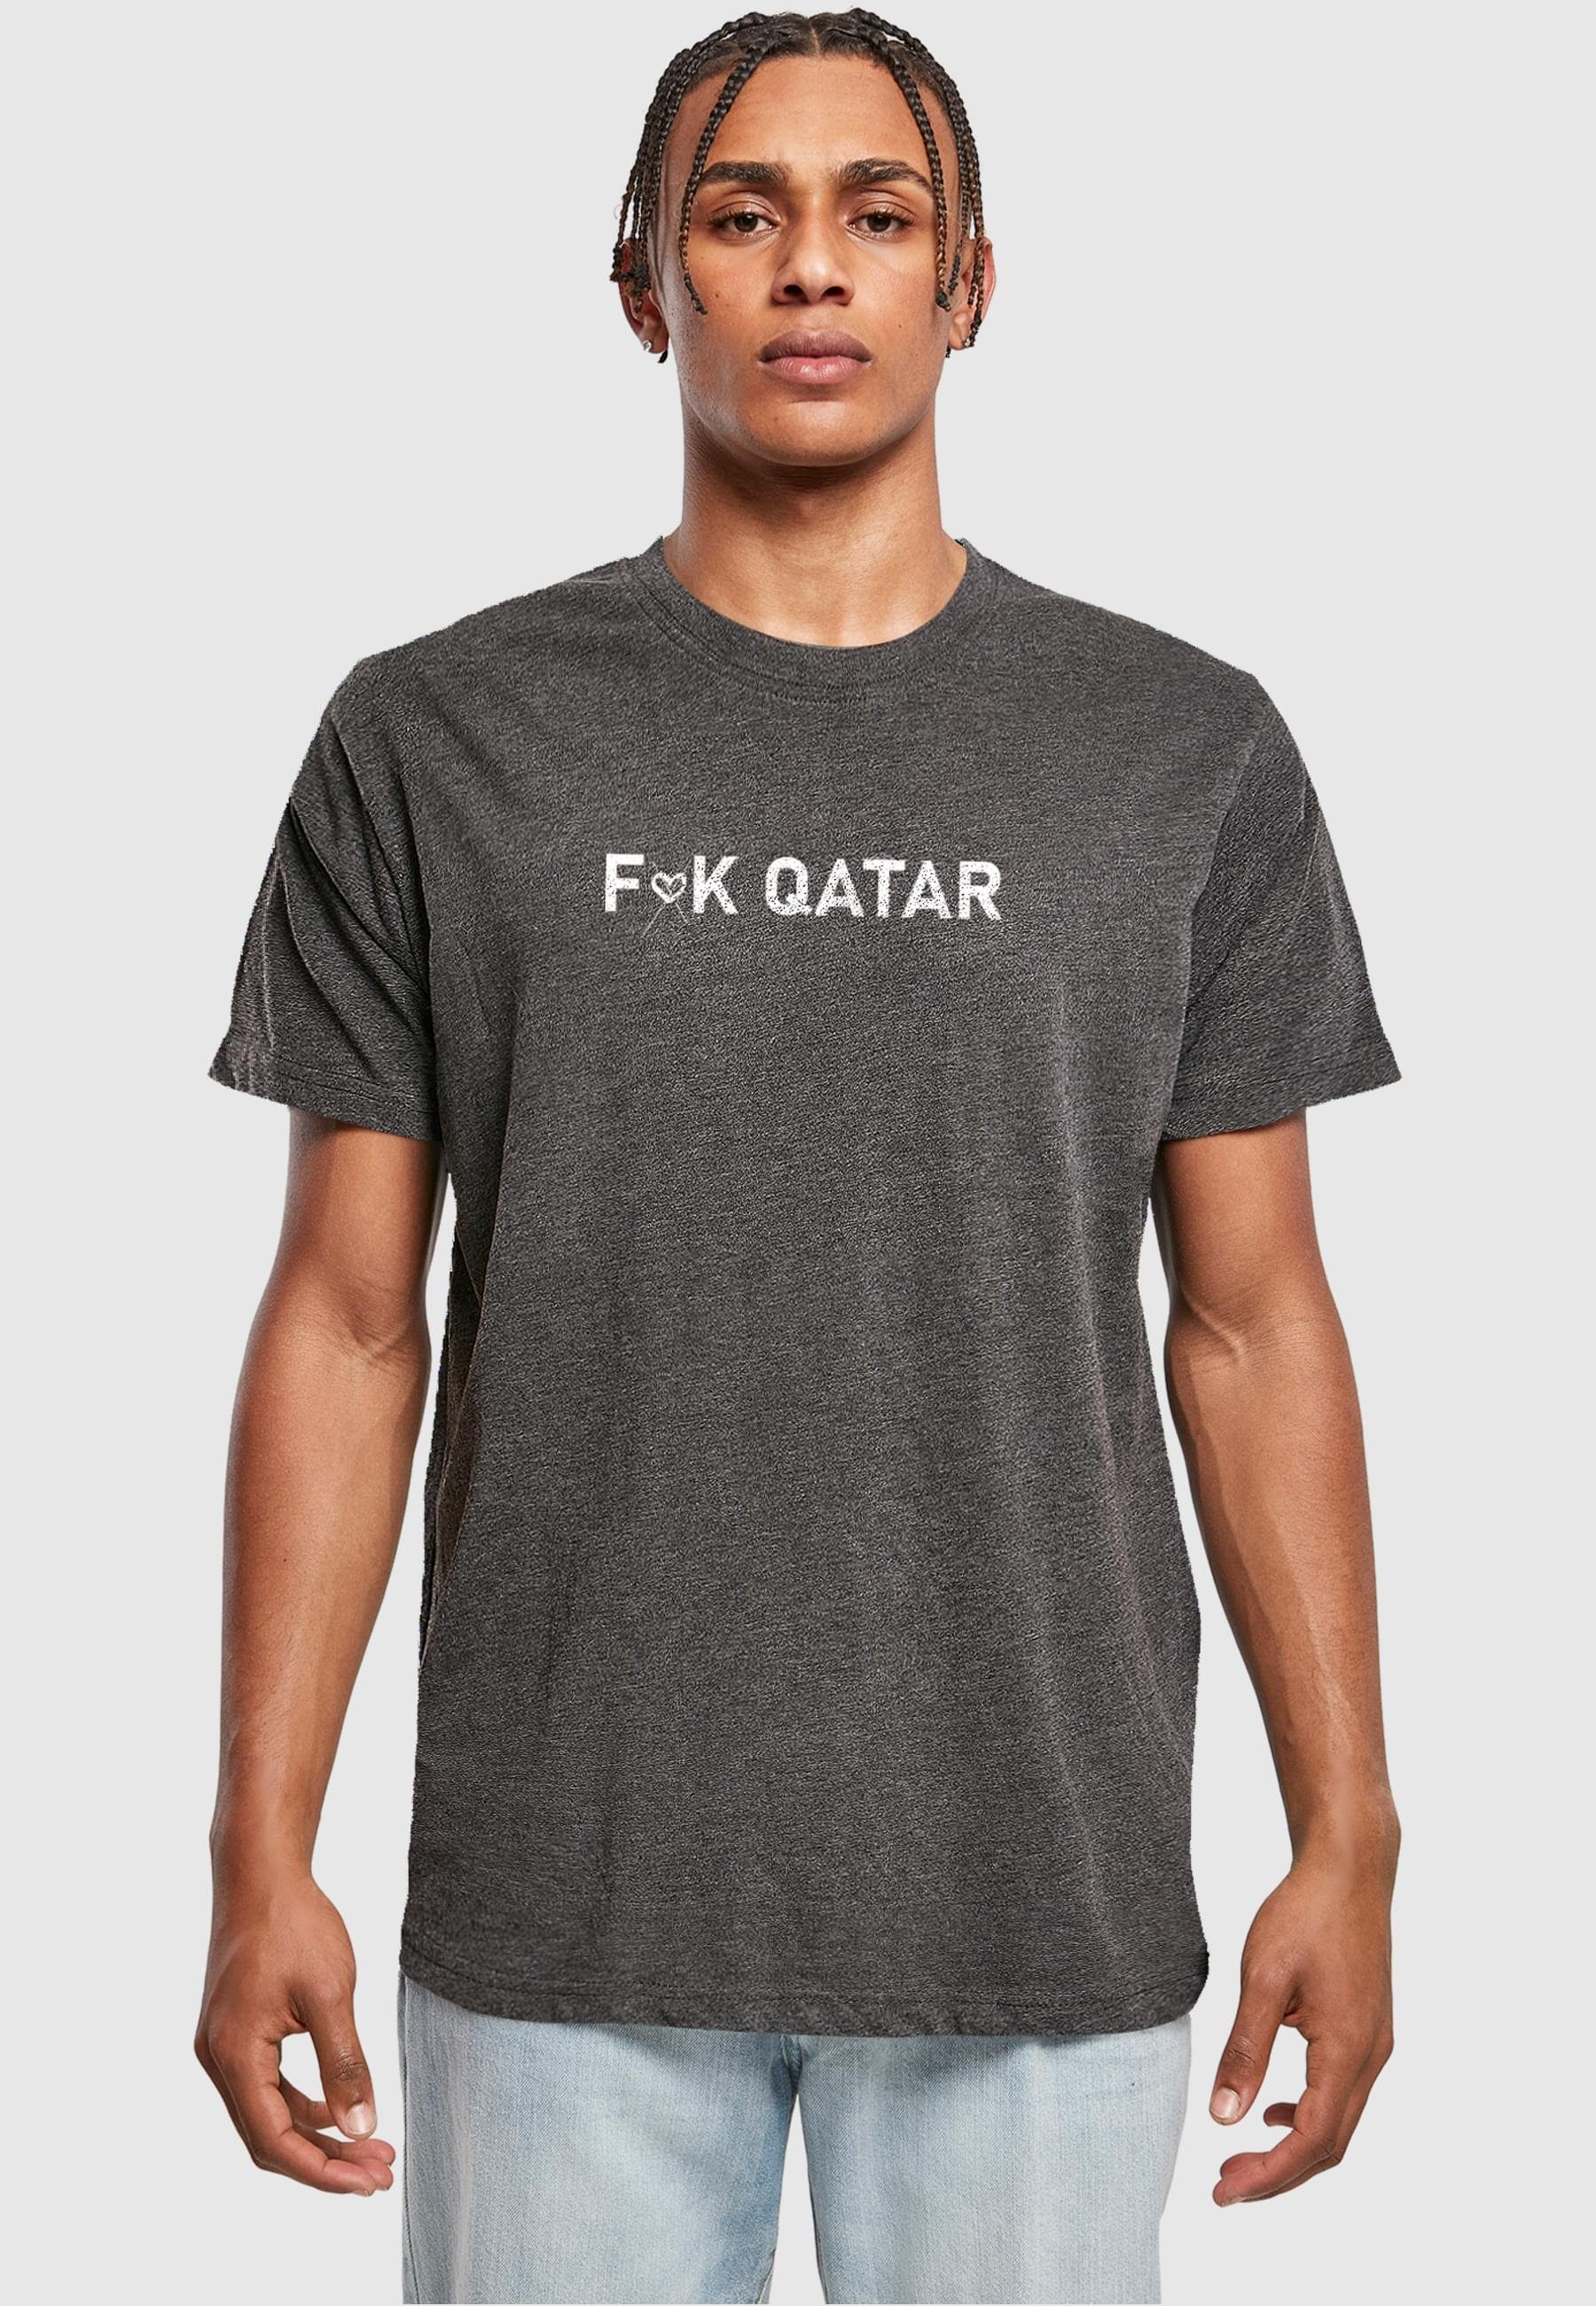 (1-tlg) F Neck Qatar Merchcode Round K T-Shirt Herren heart) (no T-Shirt charcoal